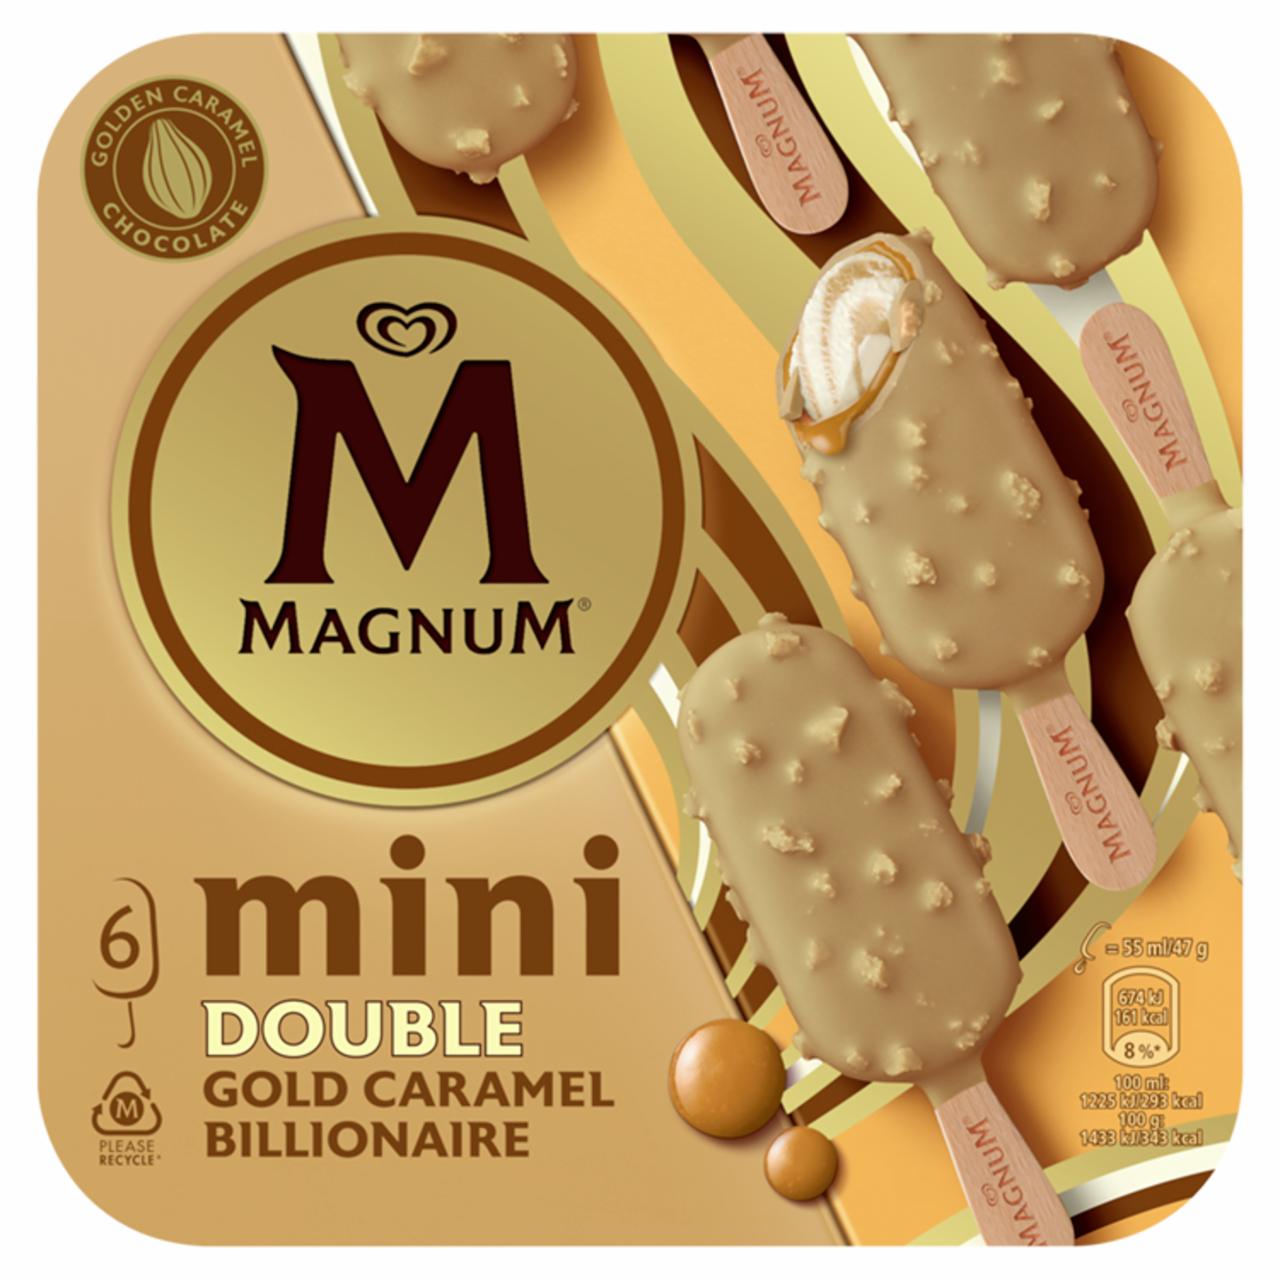 Fotografie - Magnum mini Double Gold Caramel Billionaire